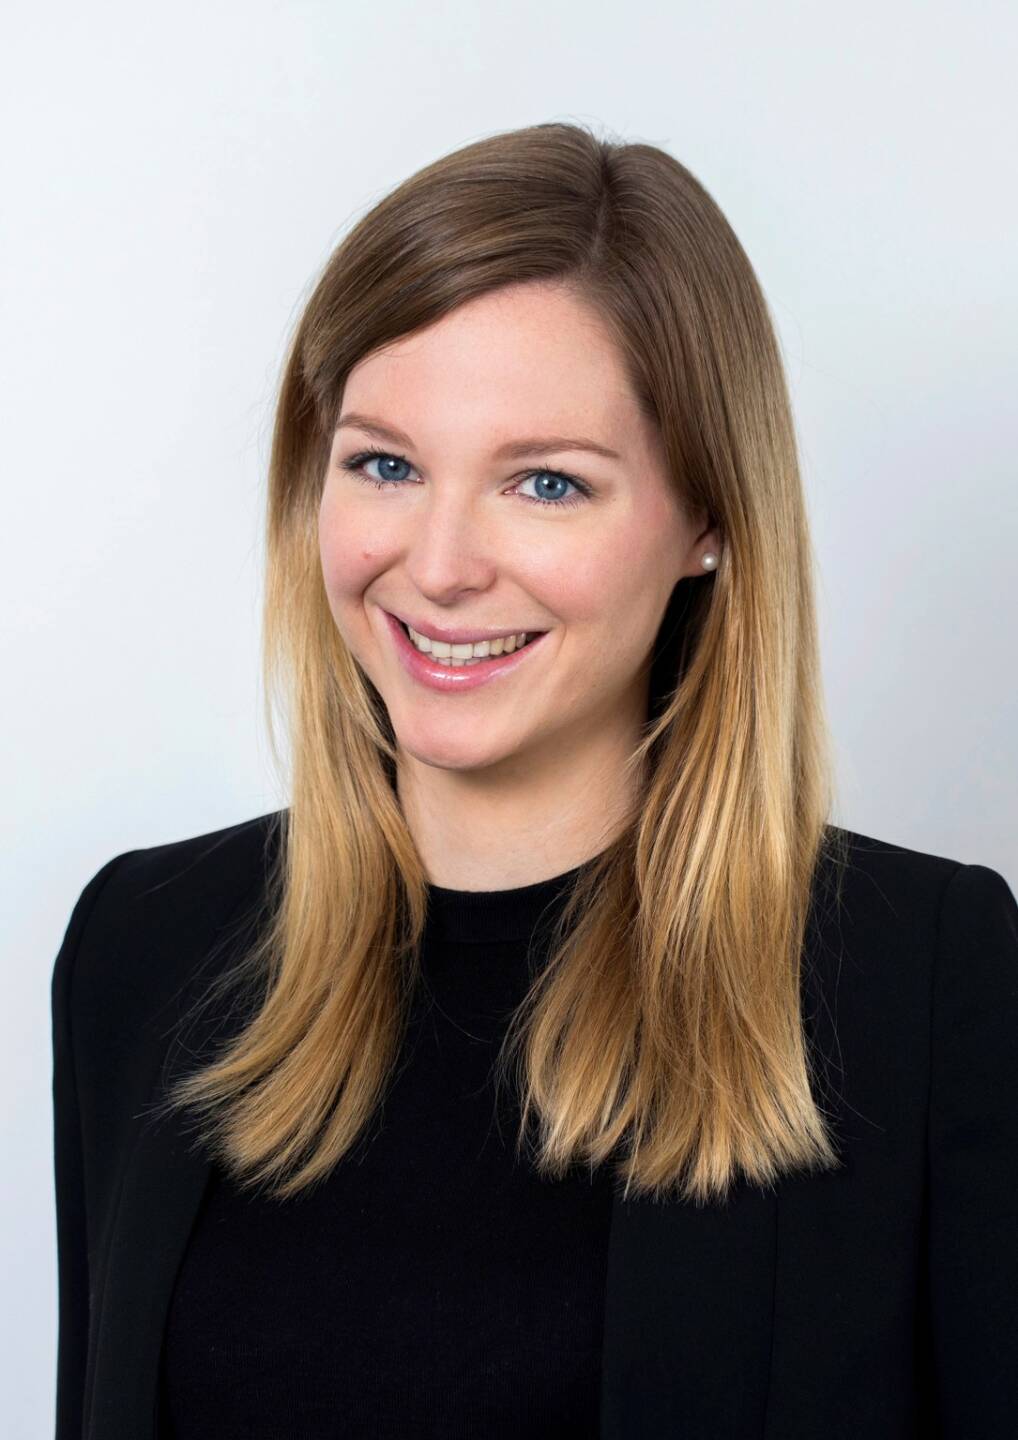 Sarah Koller verstärkt seit Jänner 2020 als Rechtsanwältin (Senior Associate) die Praxisgruppe Corporate M&A und Banking & Finance von Jank Weiler Operenyi/Deloitte Legal. Credit: feelimage/Deloitte